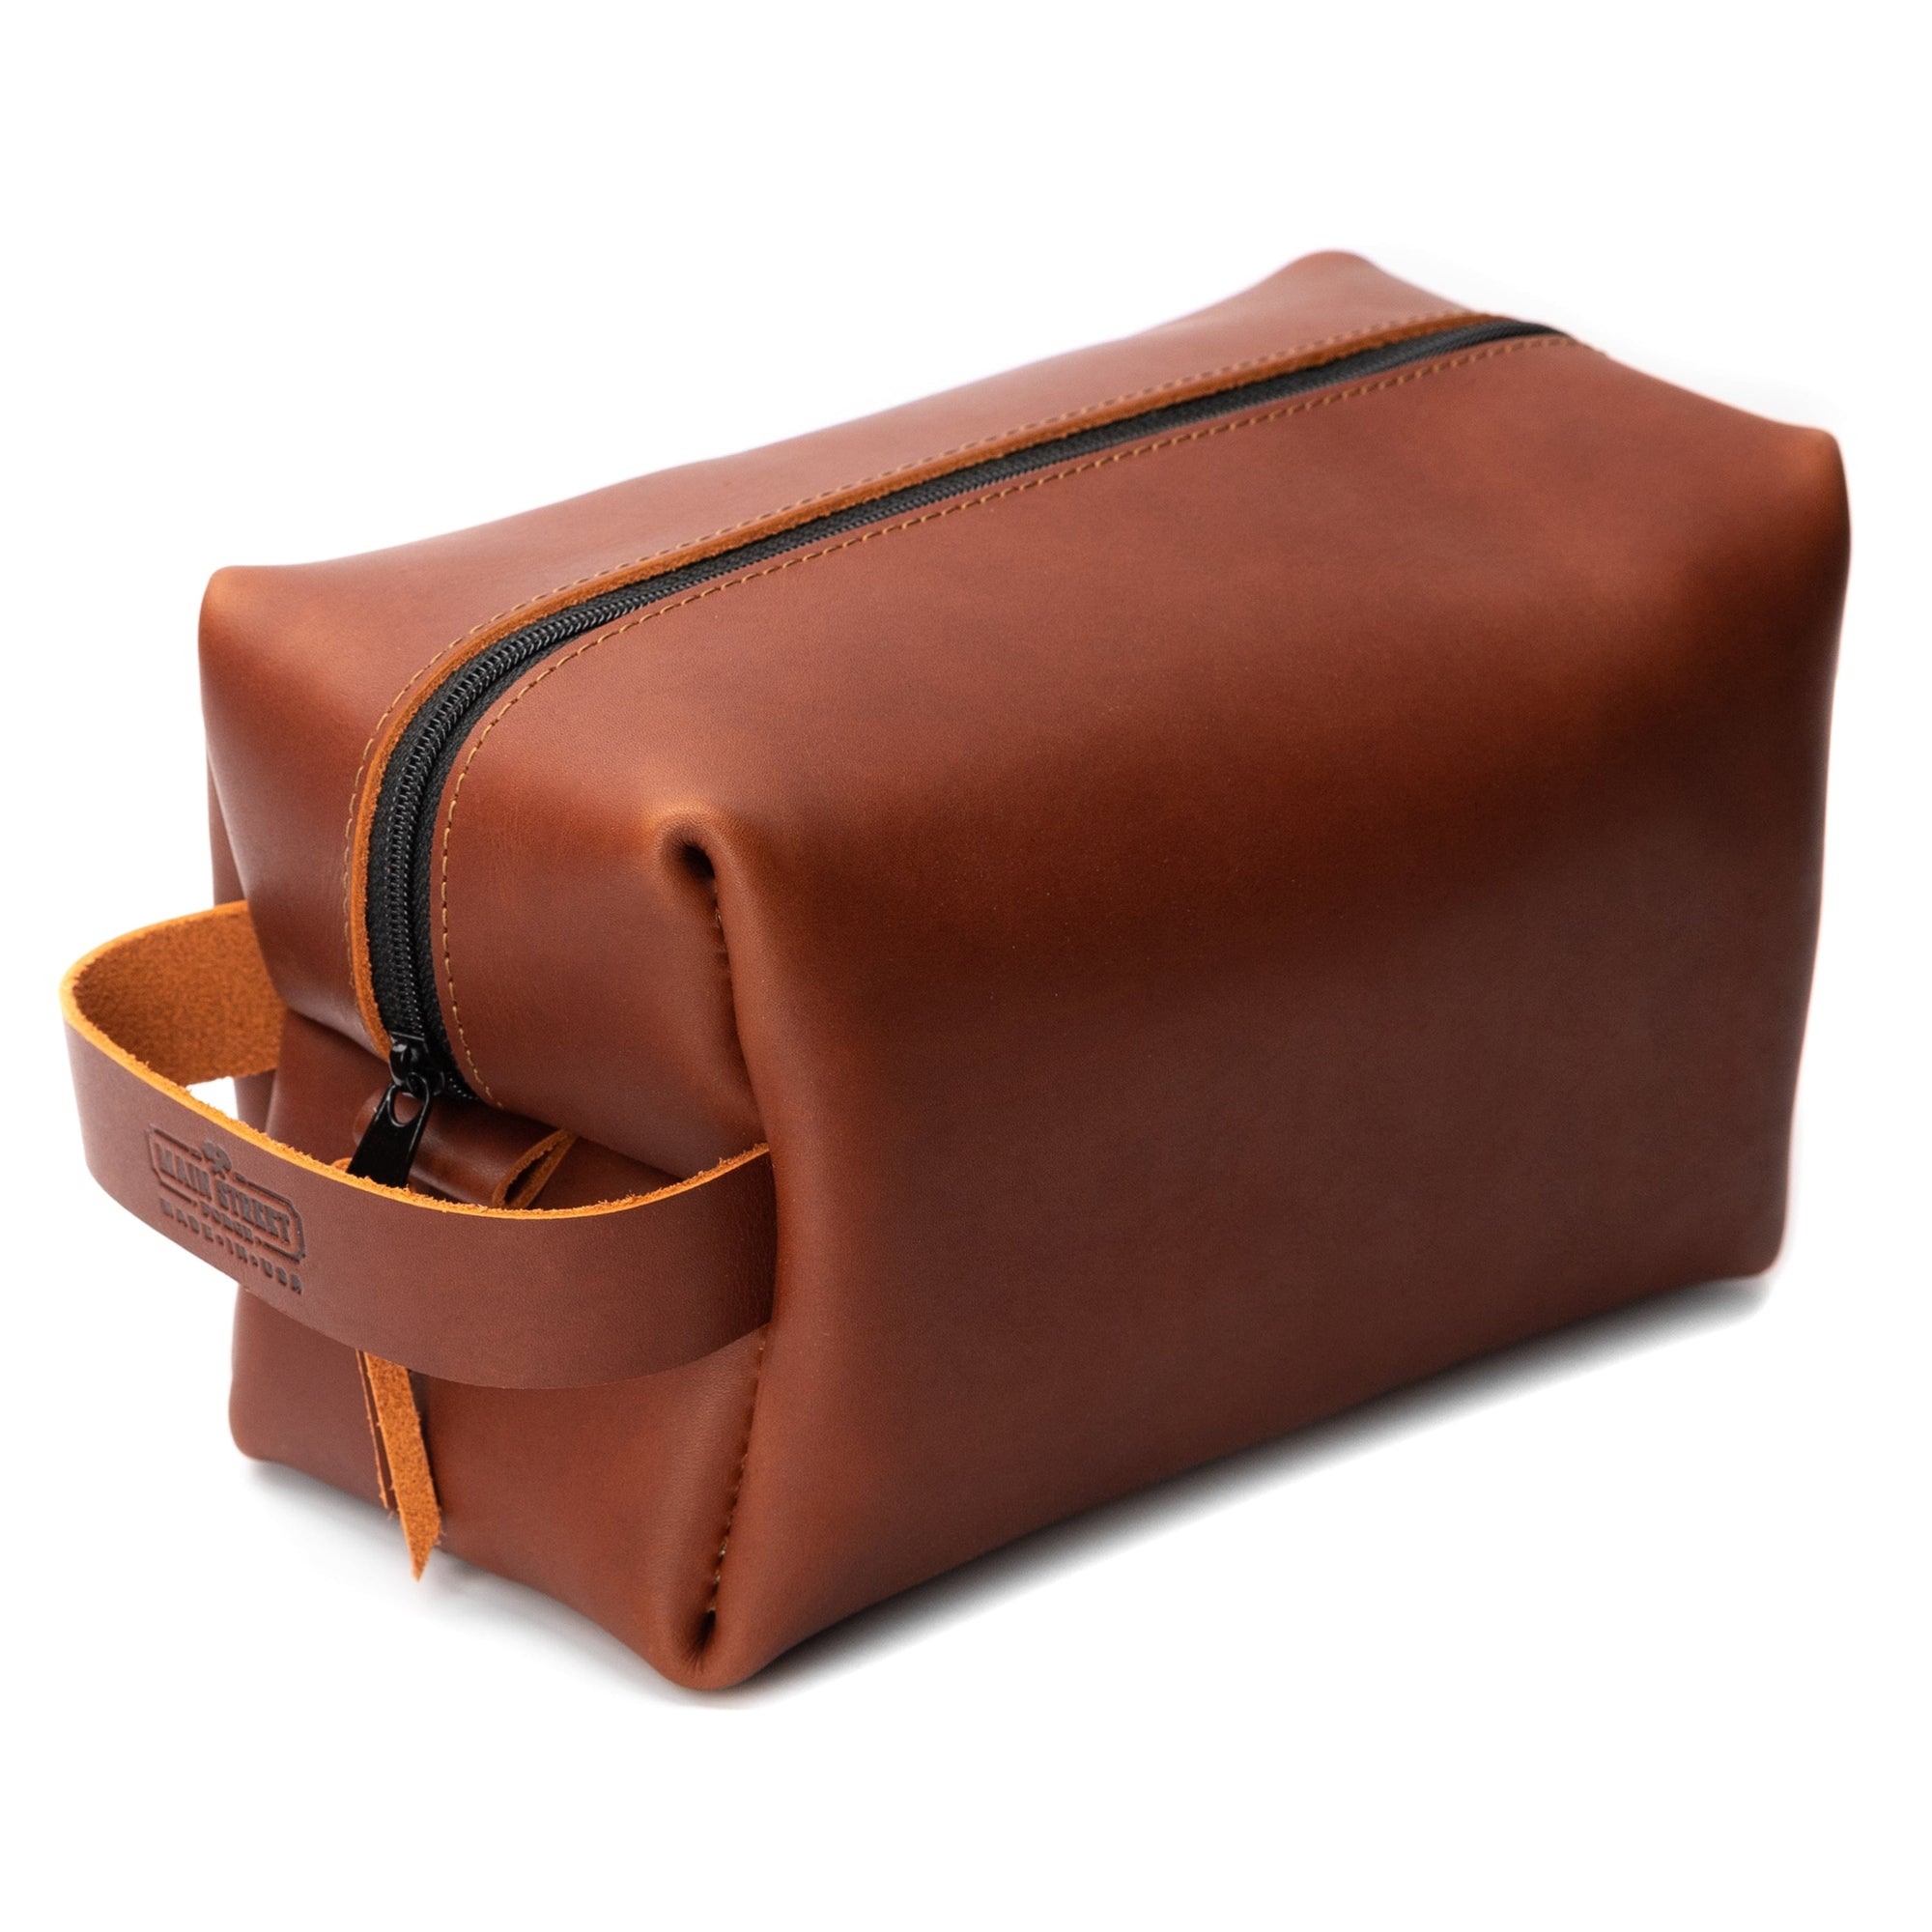 The Toiletry Bag - Men's Top Grain Leather Travel Bag